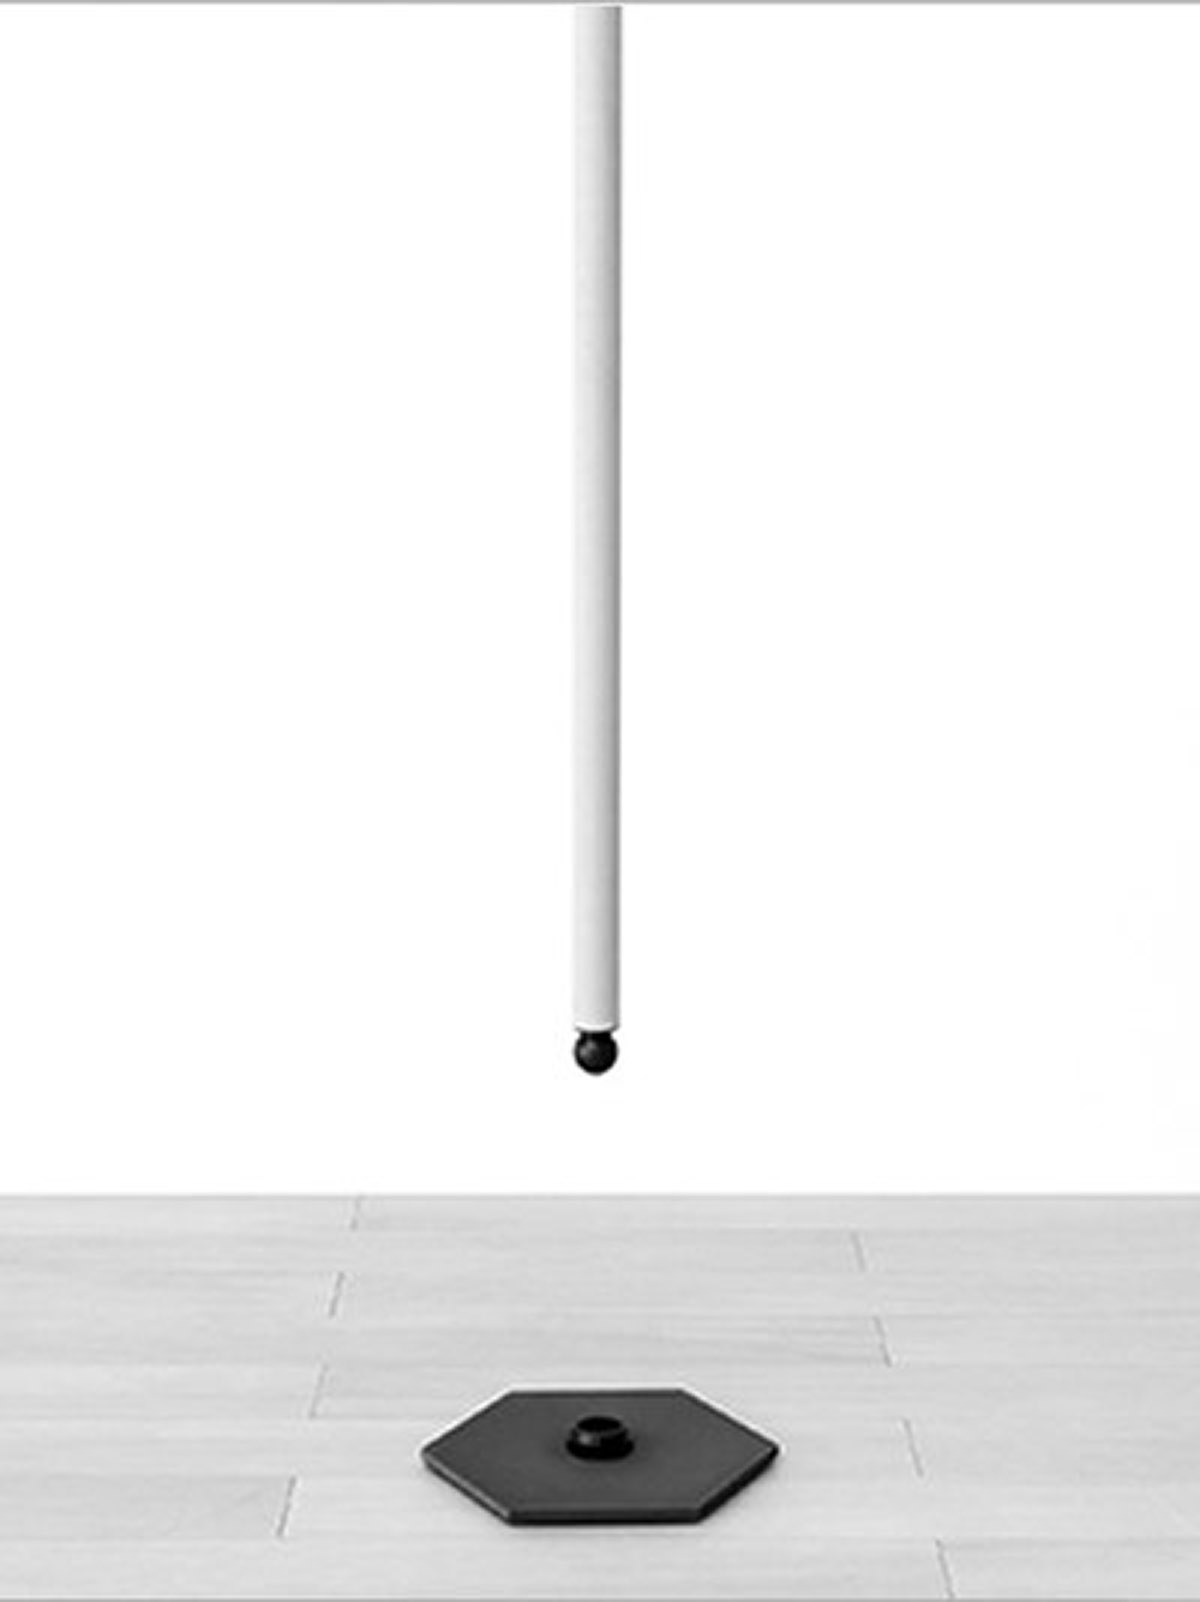 pole dancing, the pole